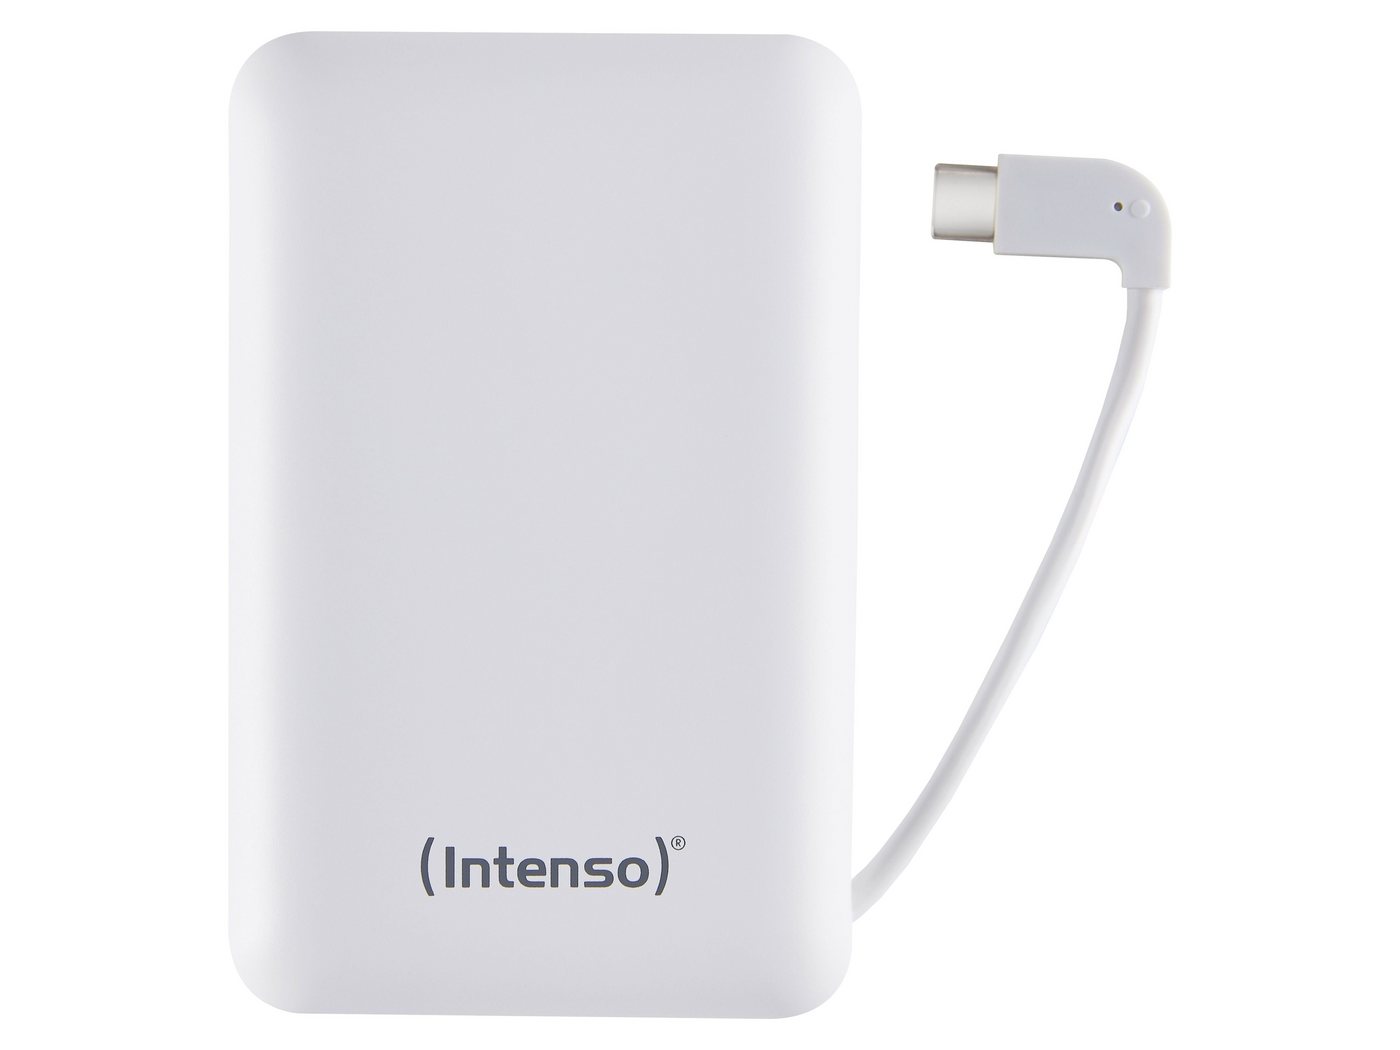 Intenso INTENSO USB Powerbank 7314532 XC 10000, 10.000 Powerbank von Intenso